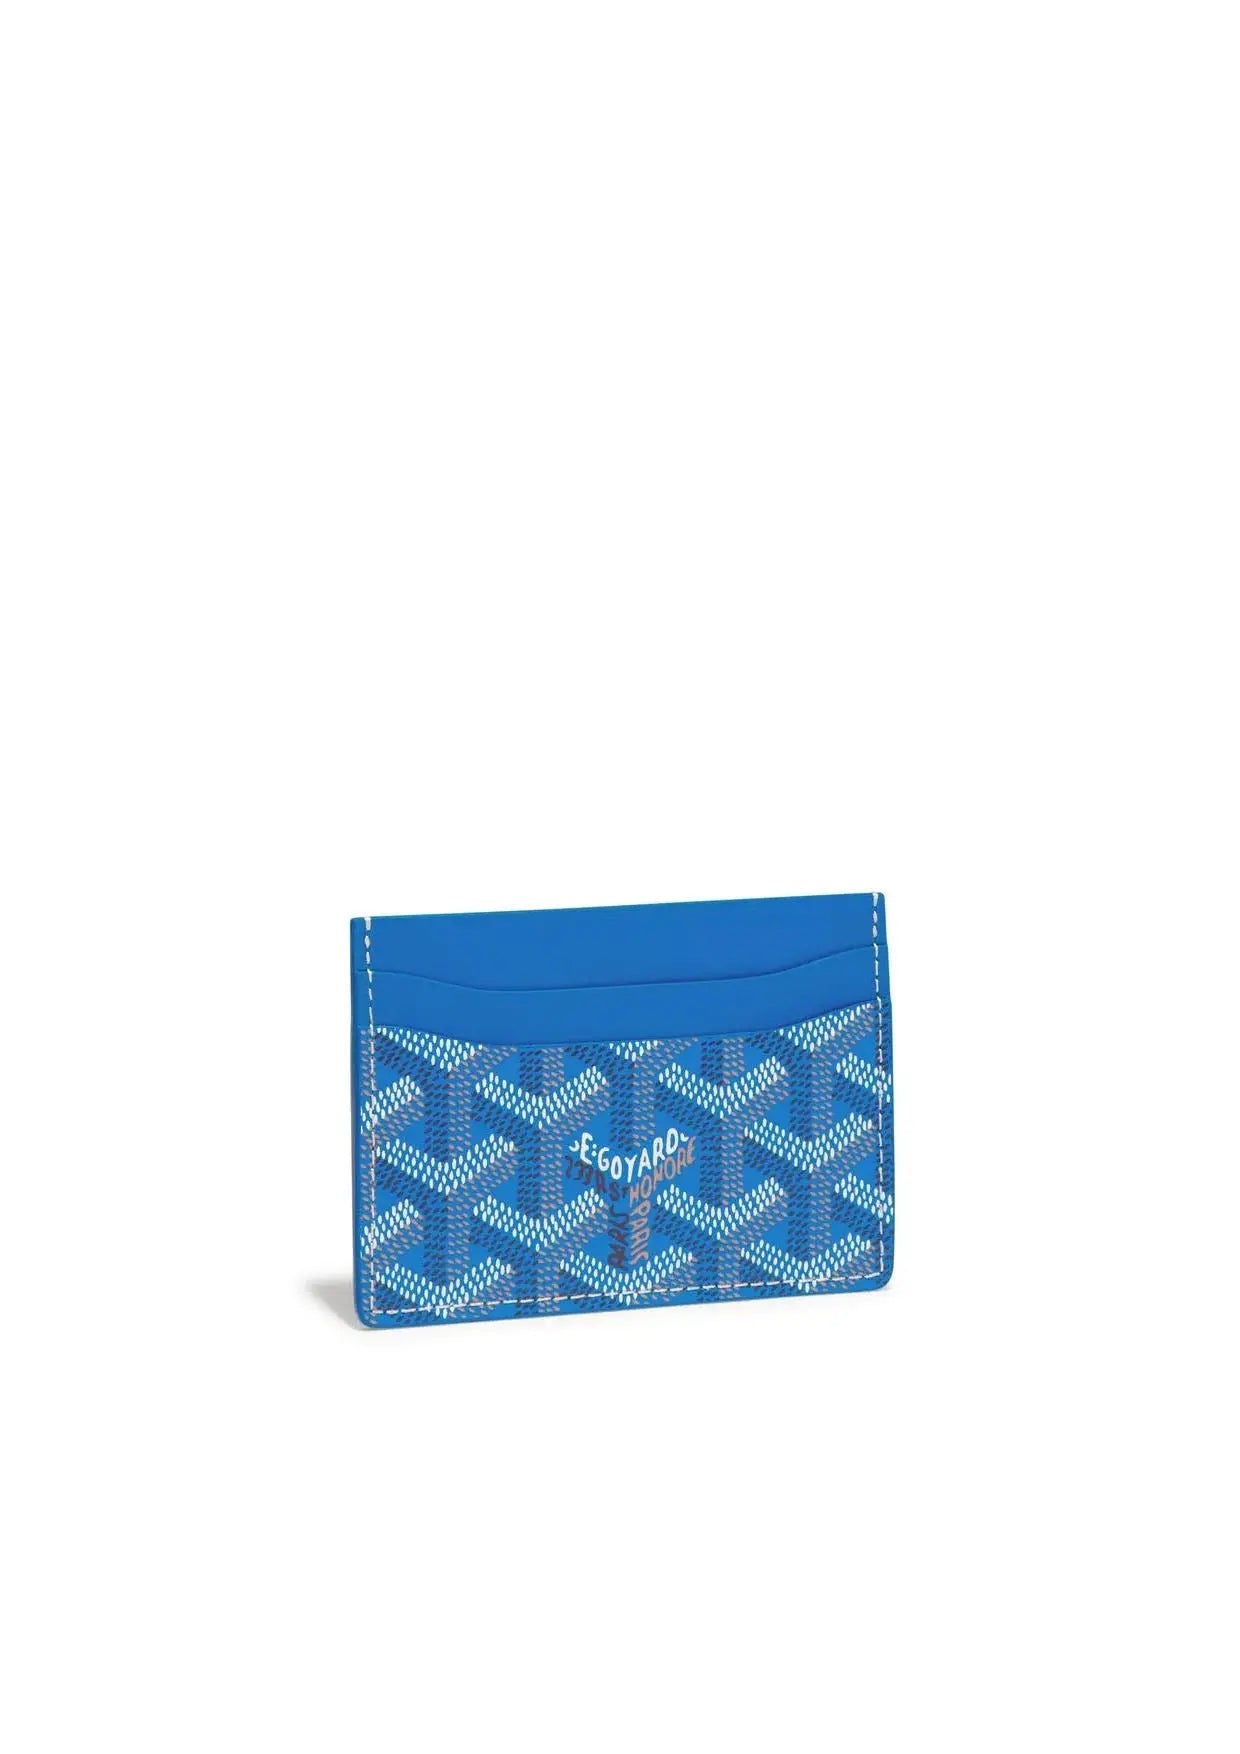 Goyard 2019 Saint Sulpice Card Holder - Blue Wallets, Accessories -  GOY37478